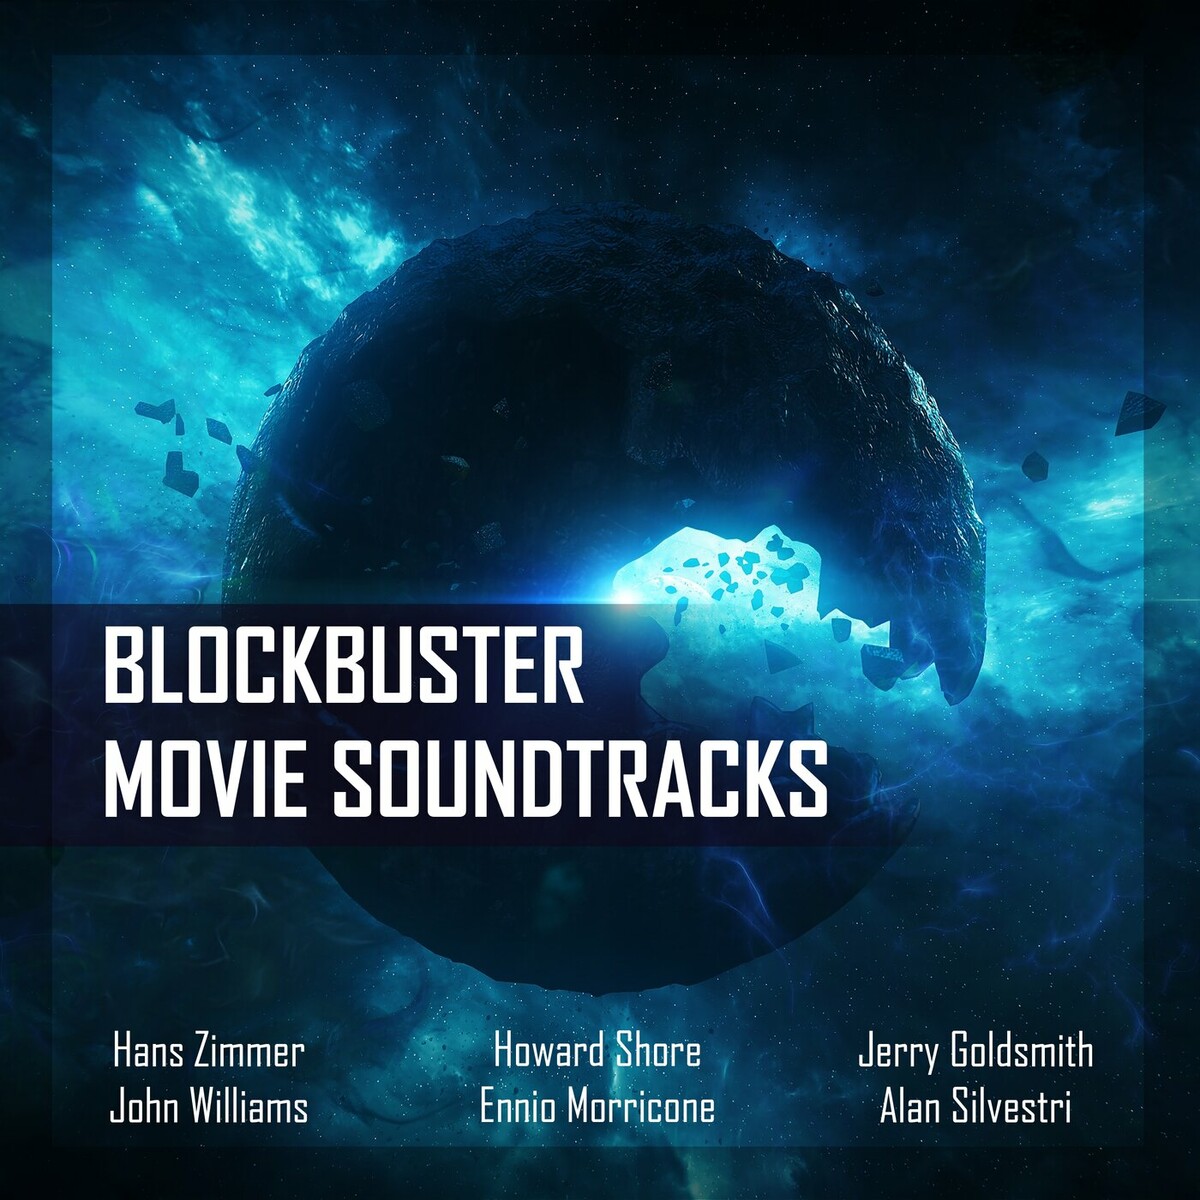 Blockbuster Movie Soundtracks -- Seeders: 1 -- Leechers: 0